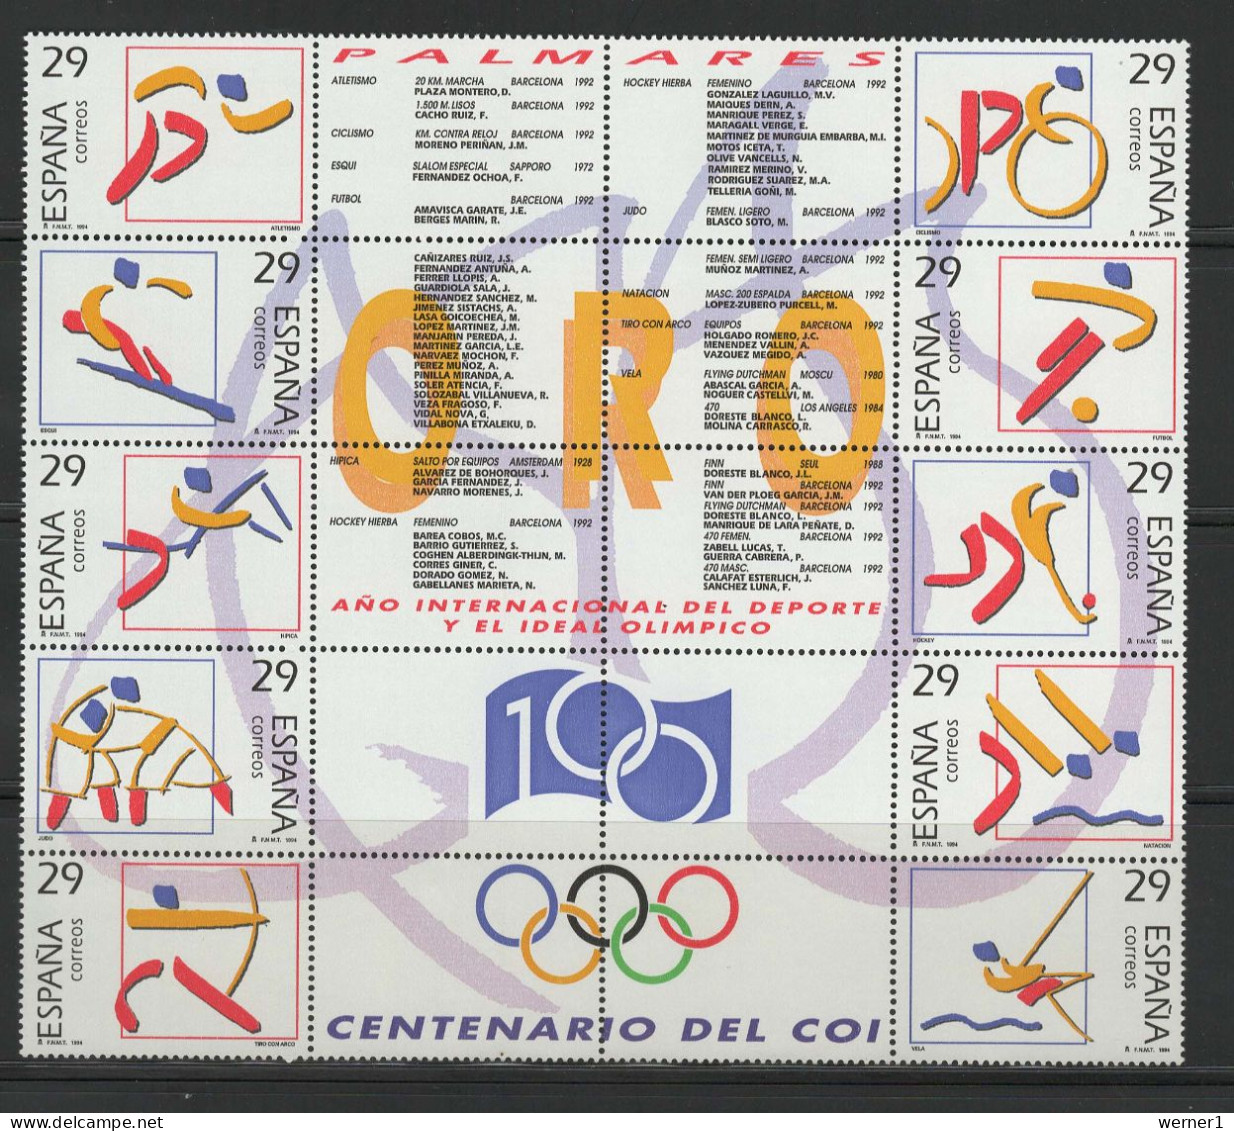 Spain 1994 Olympic Games, Equestrian, Judo, Football Soccer Etc. Sheetlet MNH - Summer 1996: Atlanta